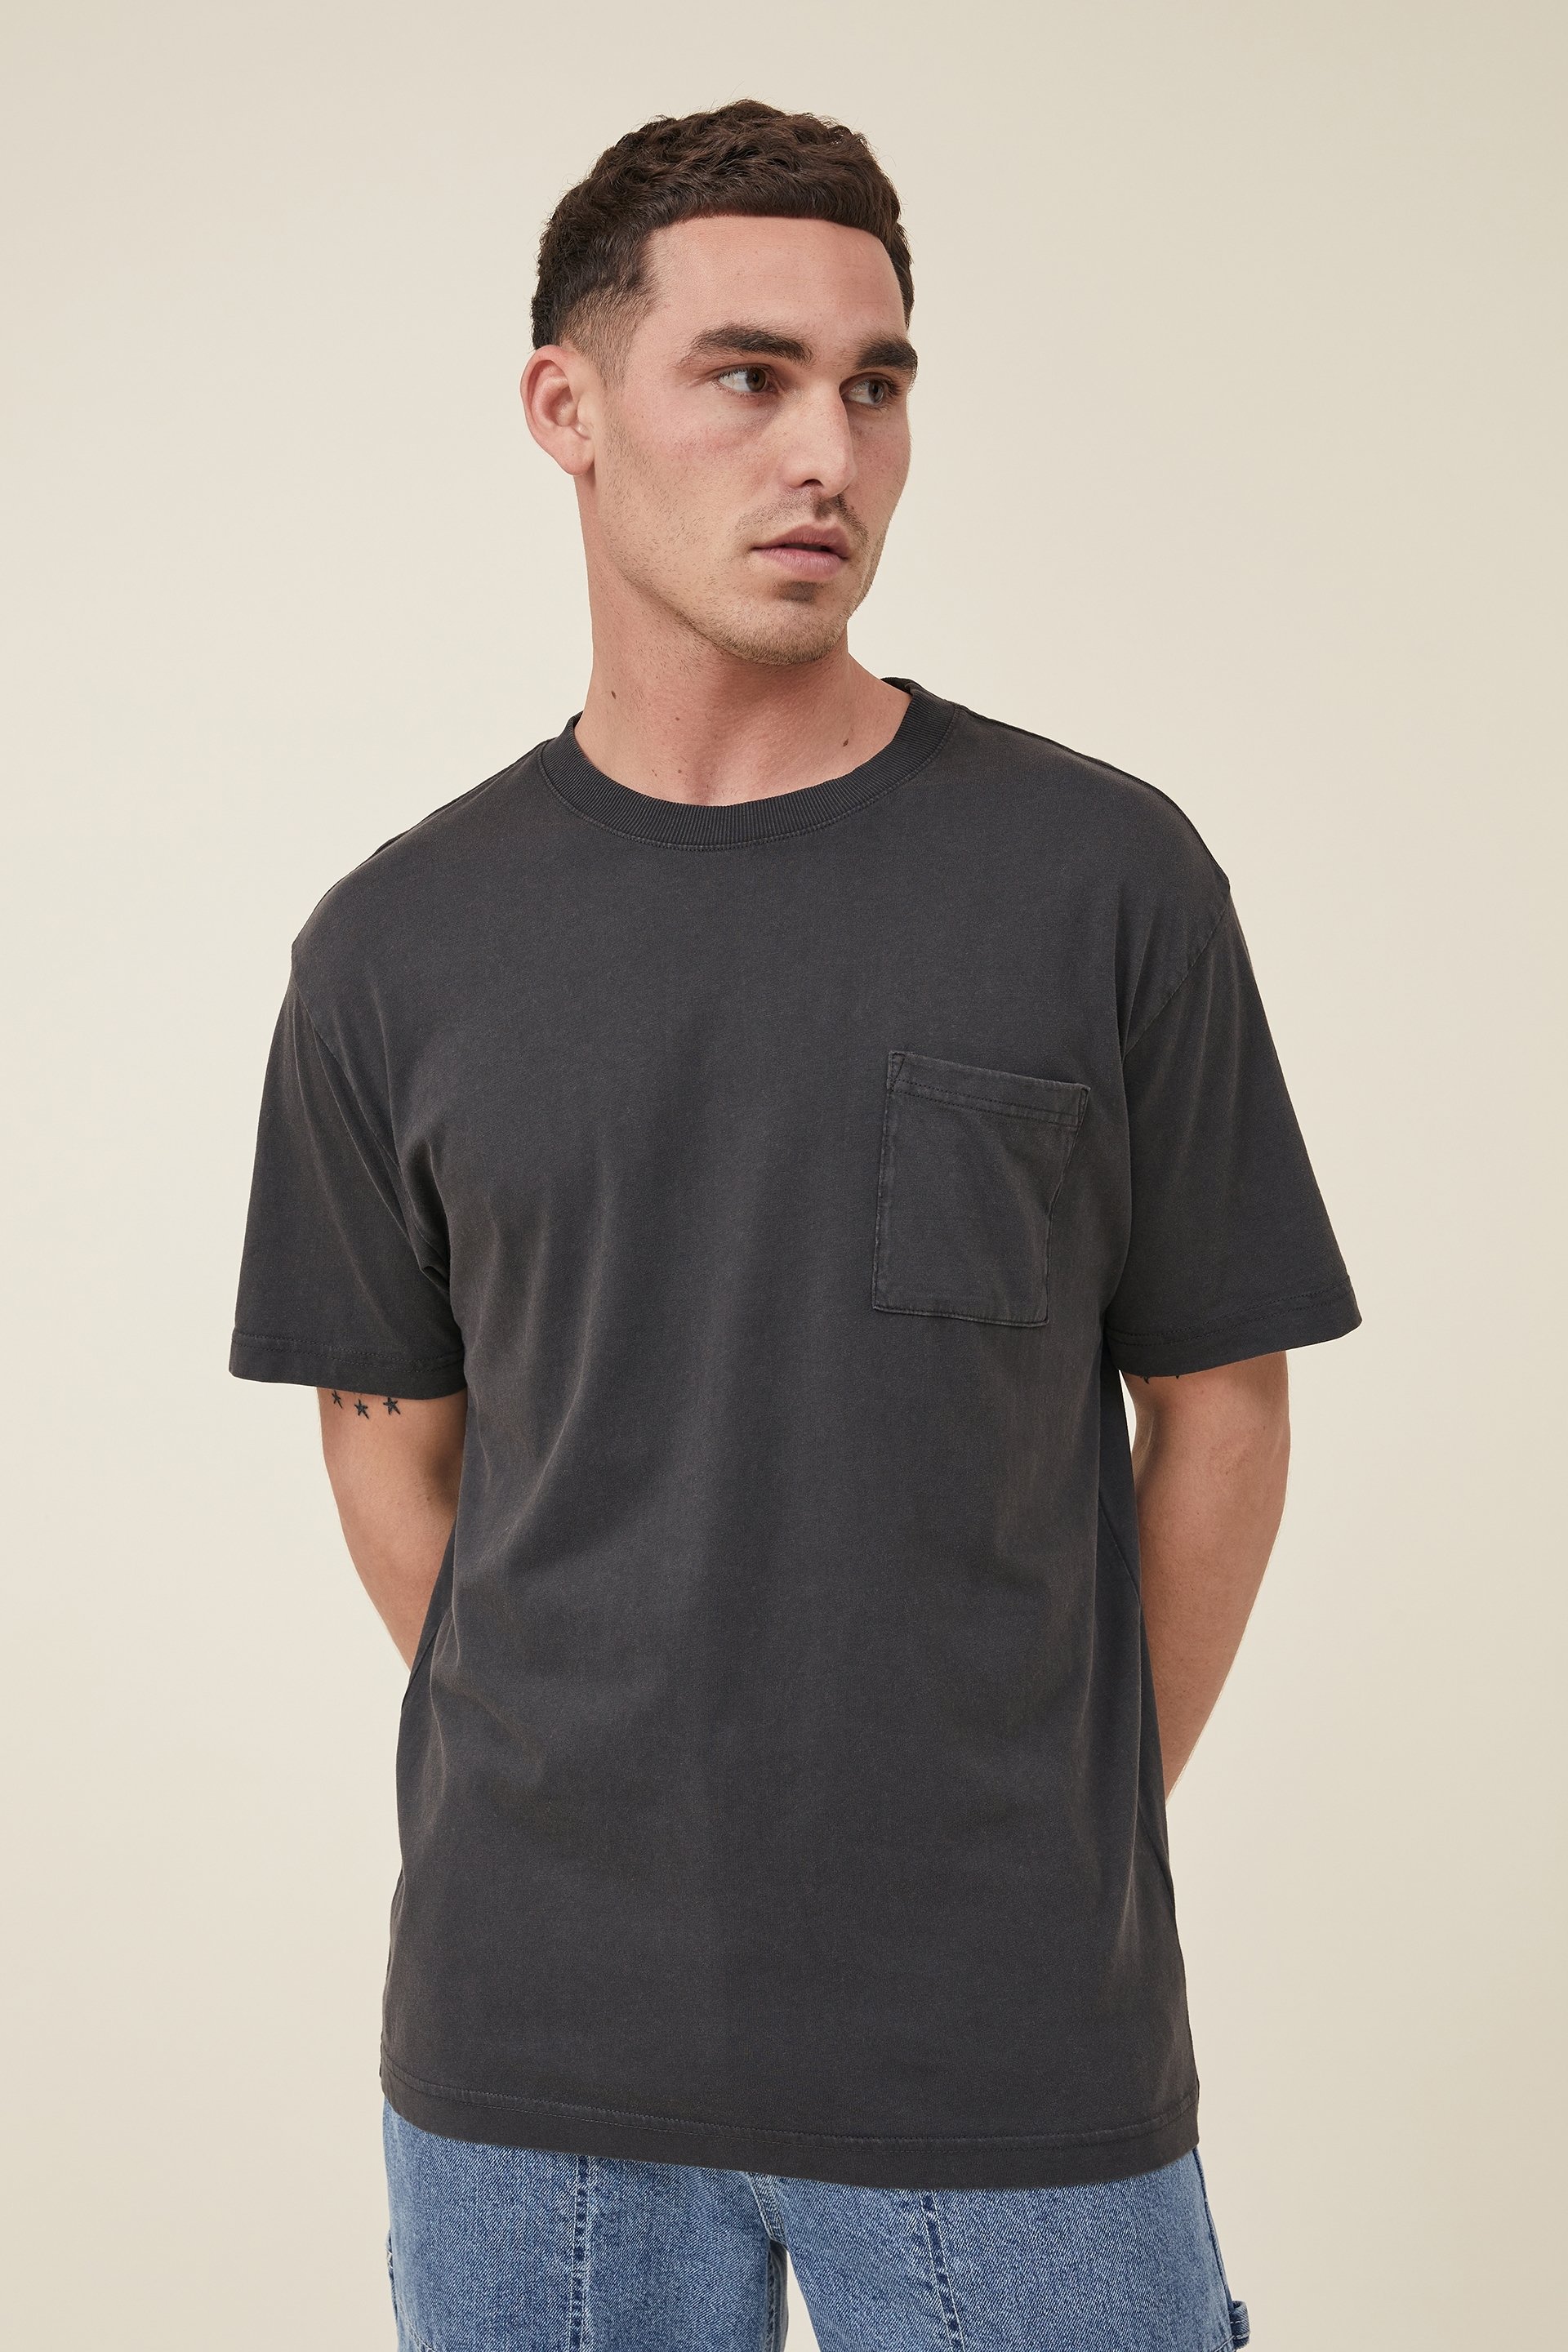 Cotton On Men - Organic Loose Fit T-Shirt - Washed black